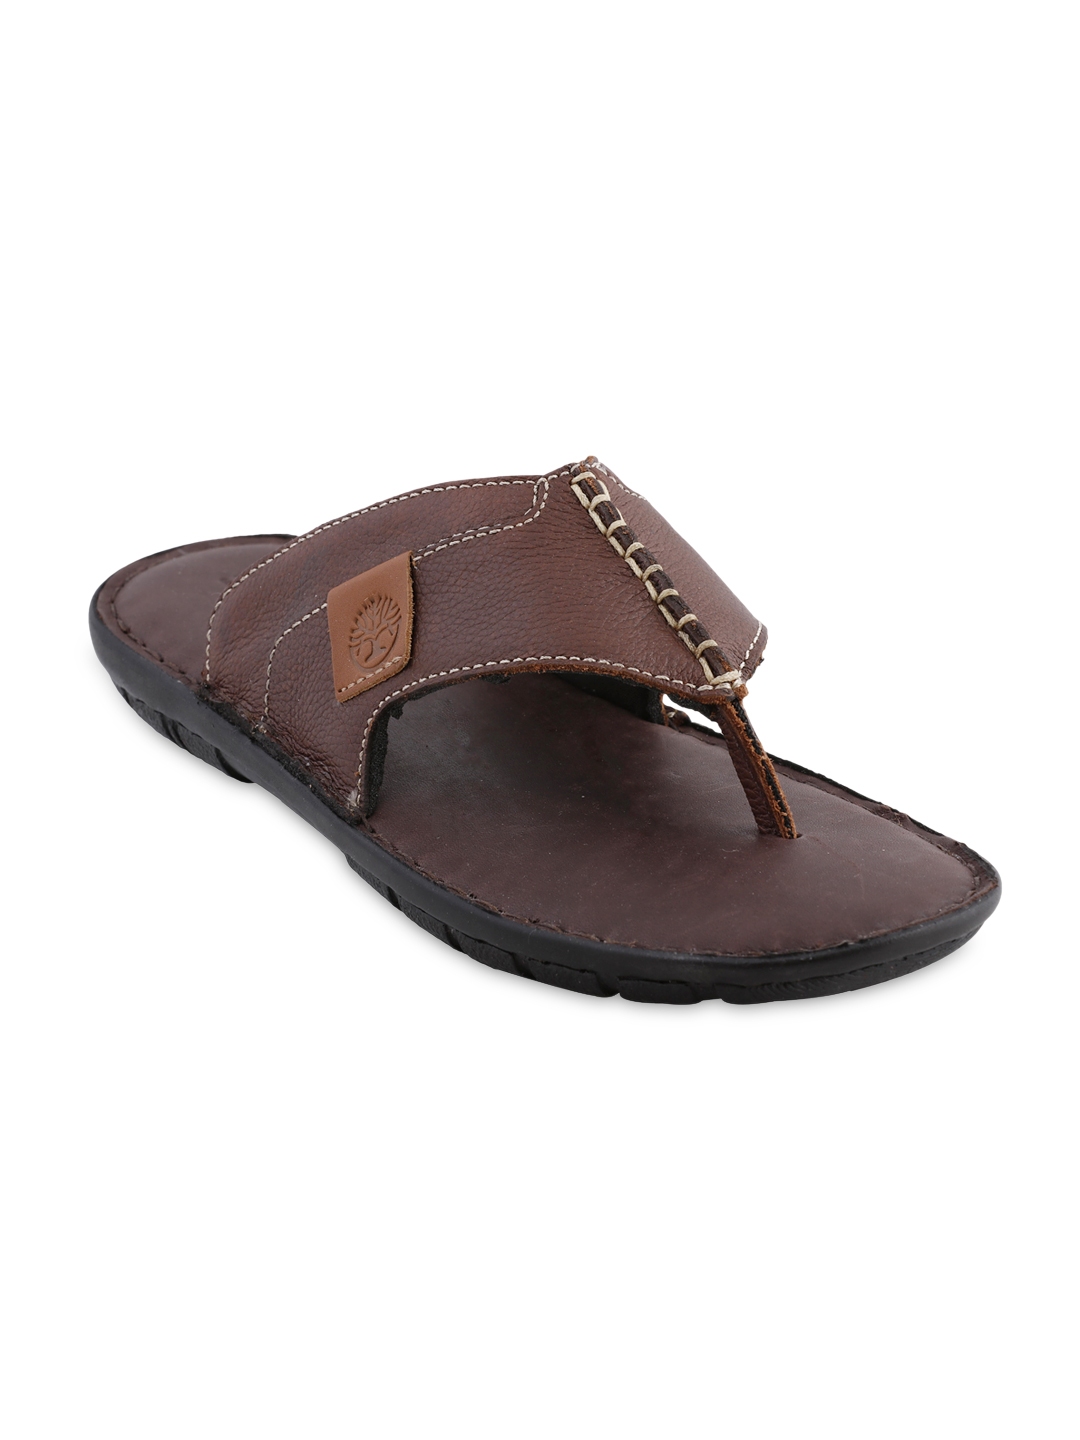 Buy Ventoland Men Brown Leather Sandals 